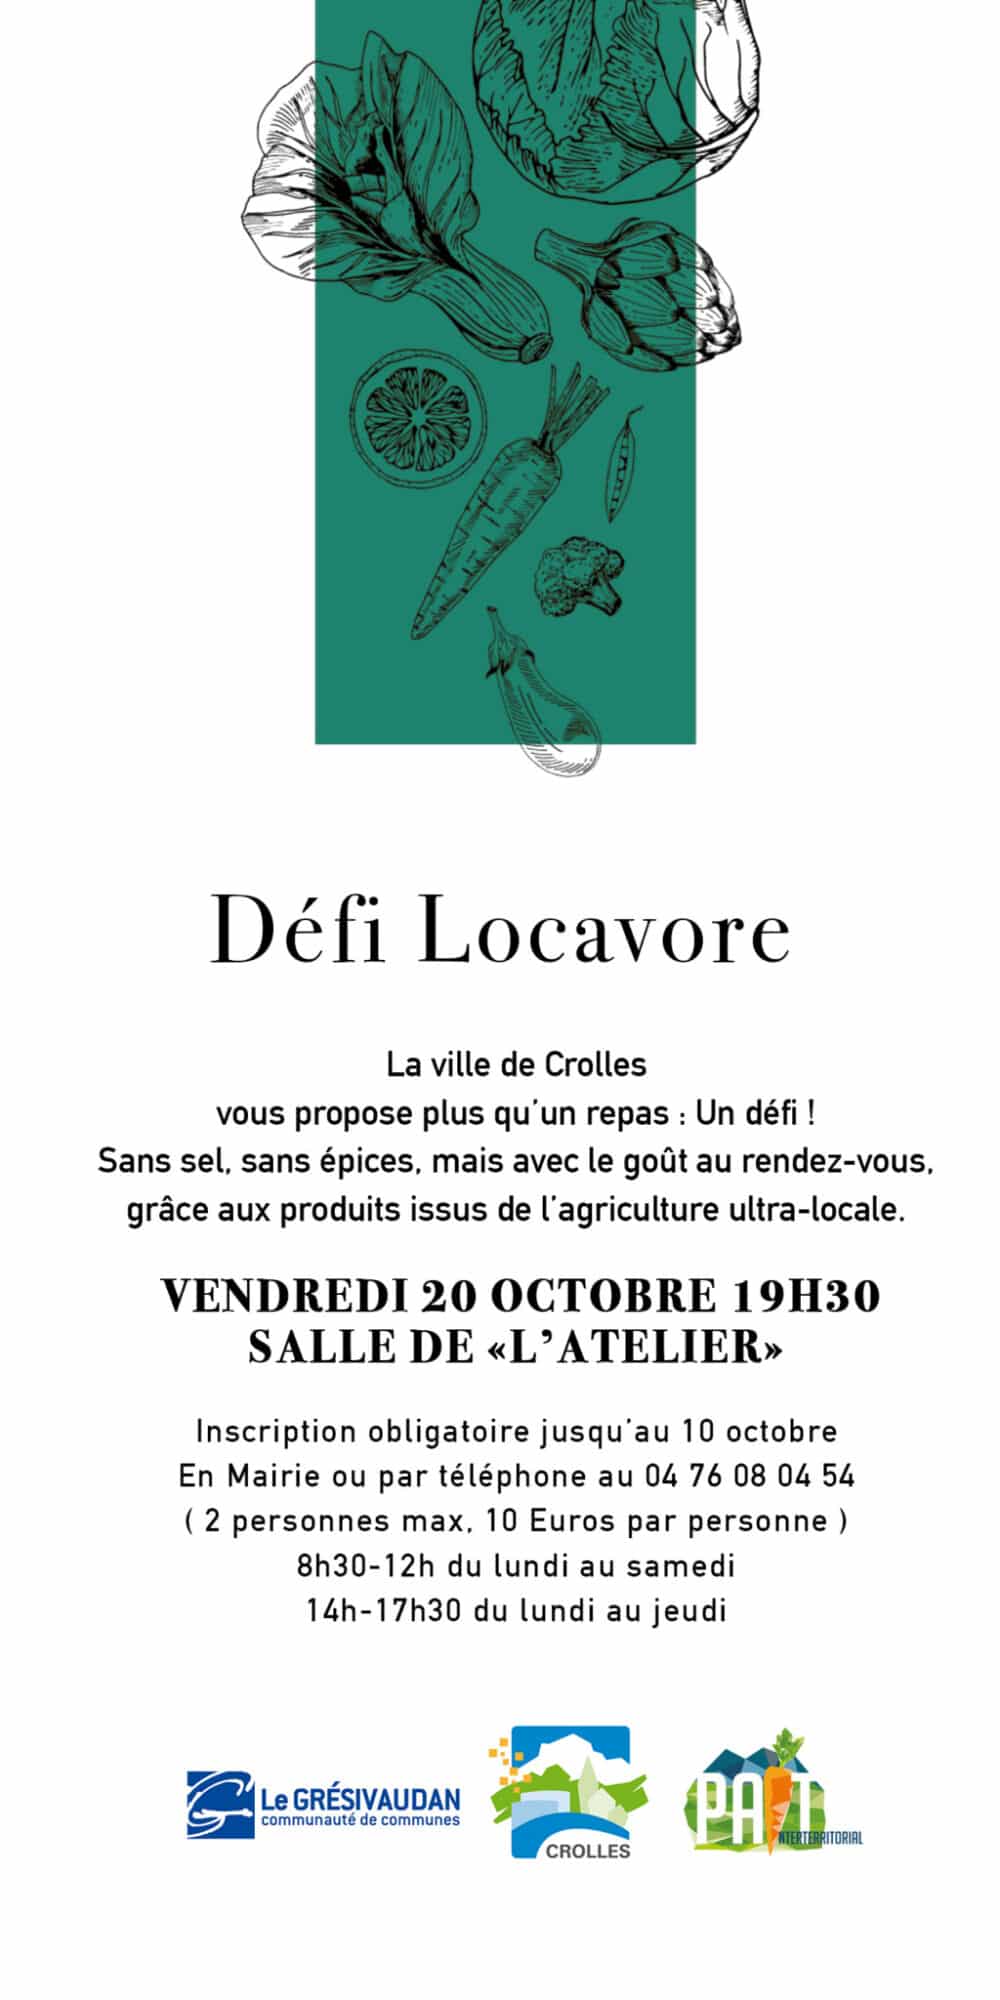 PAiT Grenoble | Défi Locavore